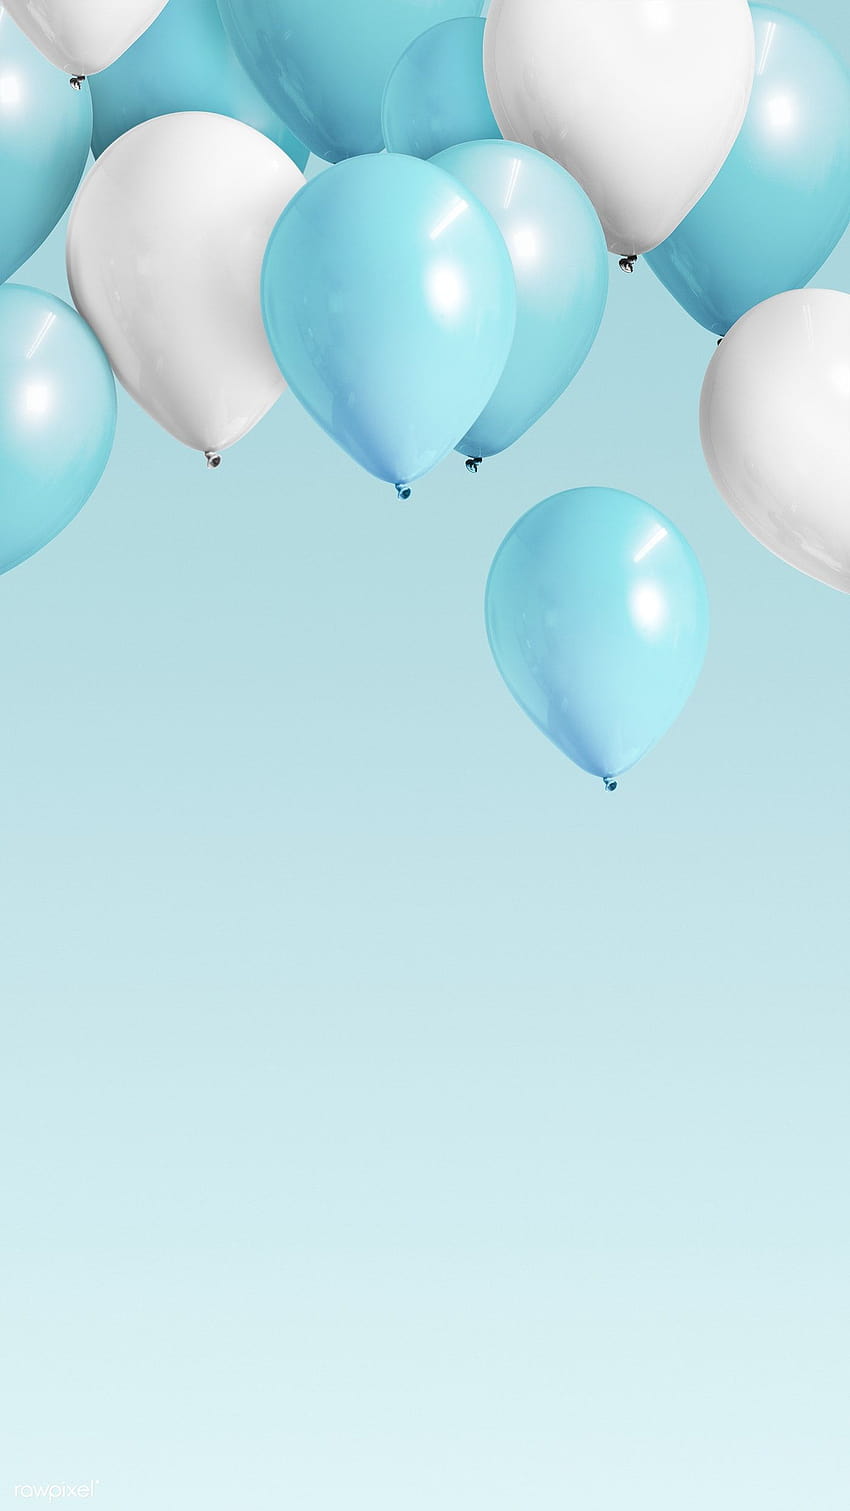 ilustración Descarga Premium de globos azules en colores pastel de teléfonos móviles in 2020, confetti balloons iphone HD phone wallpaper